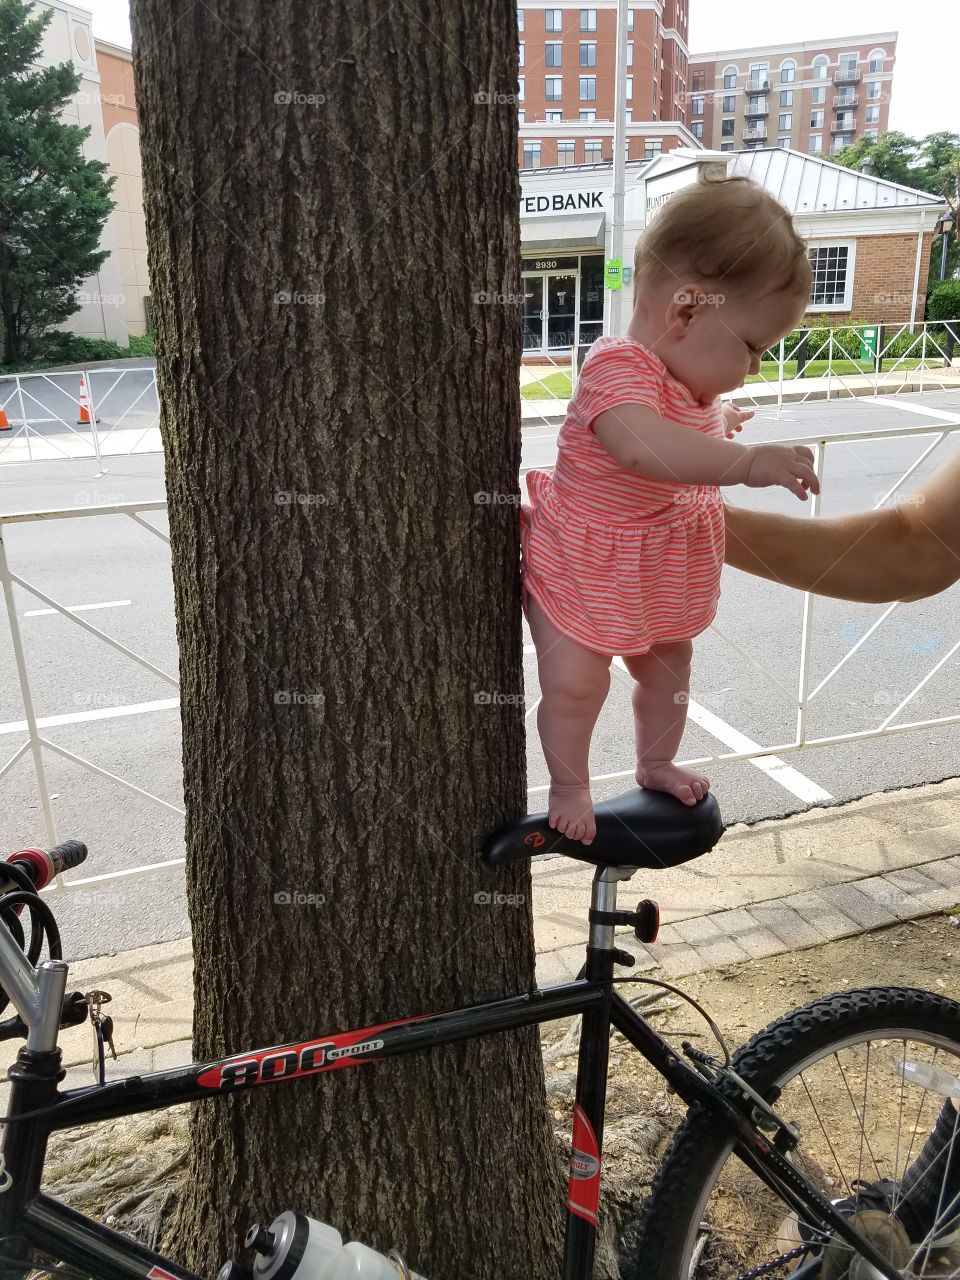 Baby's on a bike!